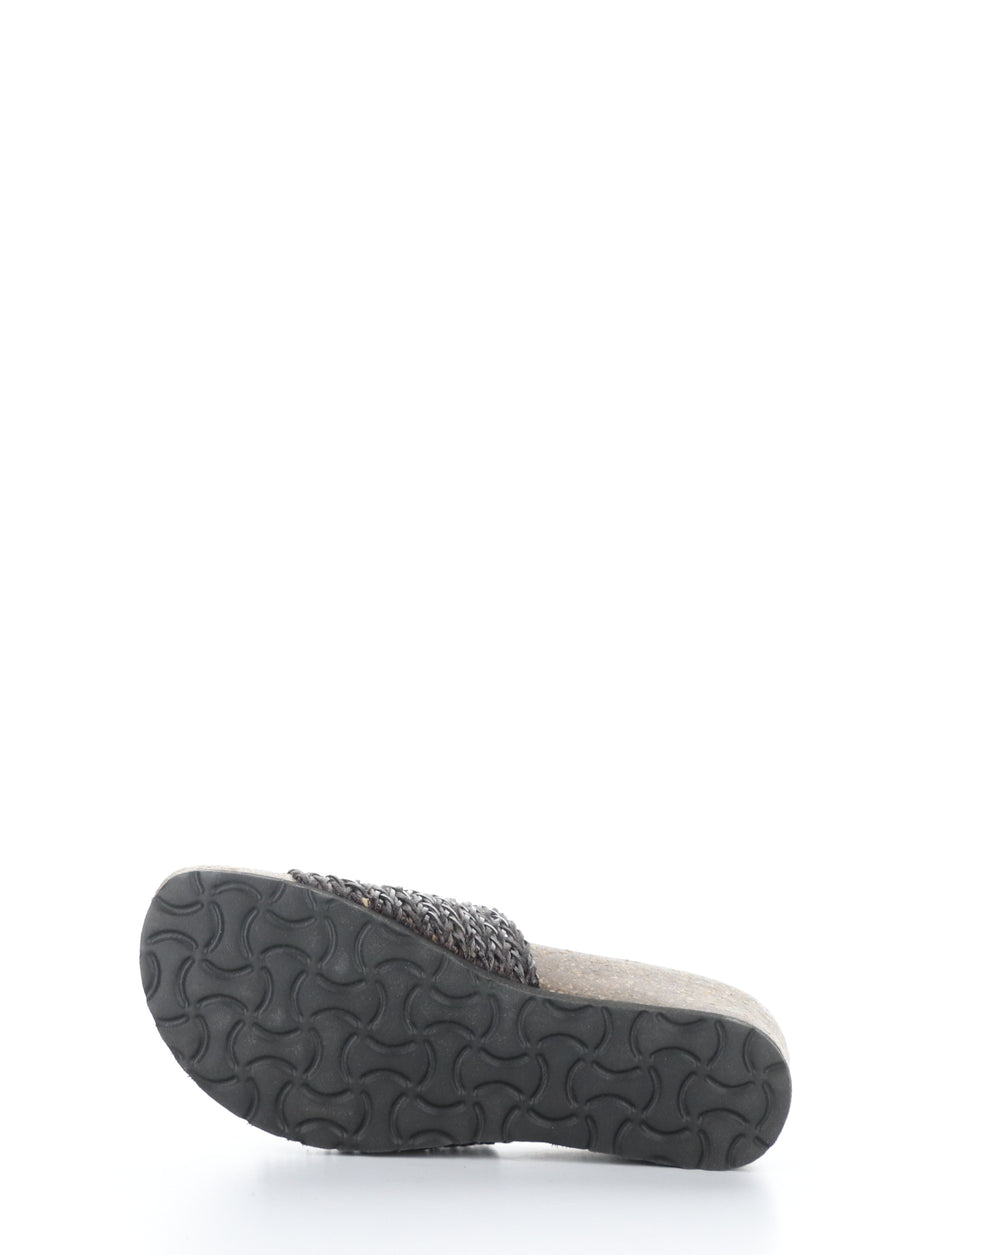 LACIE BLACK Slip-on Sandals